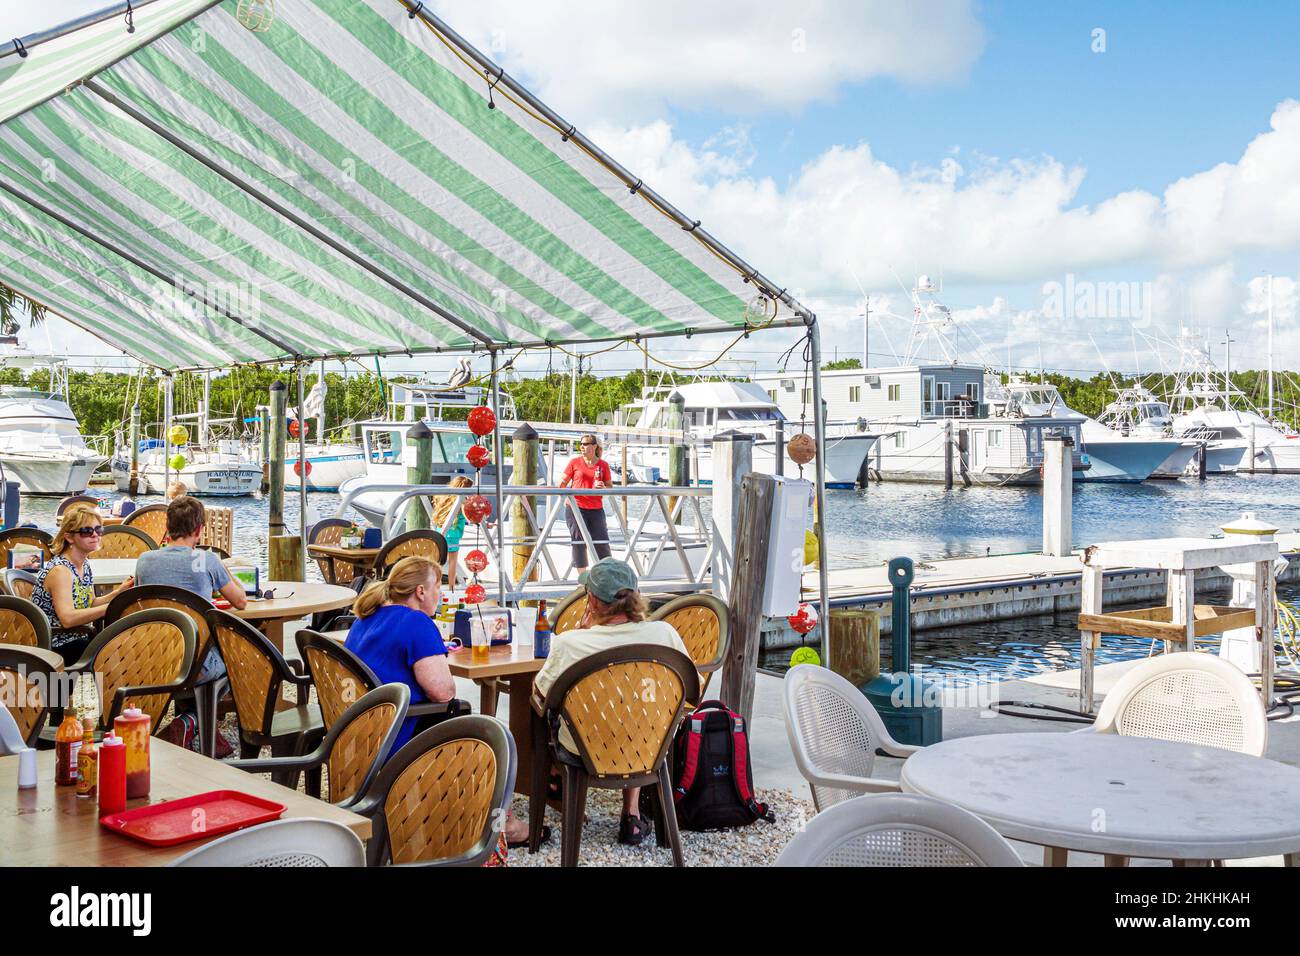 Florida Upper Keys,Key Largo Fisheries Backyard,restaurant waterfront,dining al fresco outside tables marina boats Stock Photo